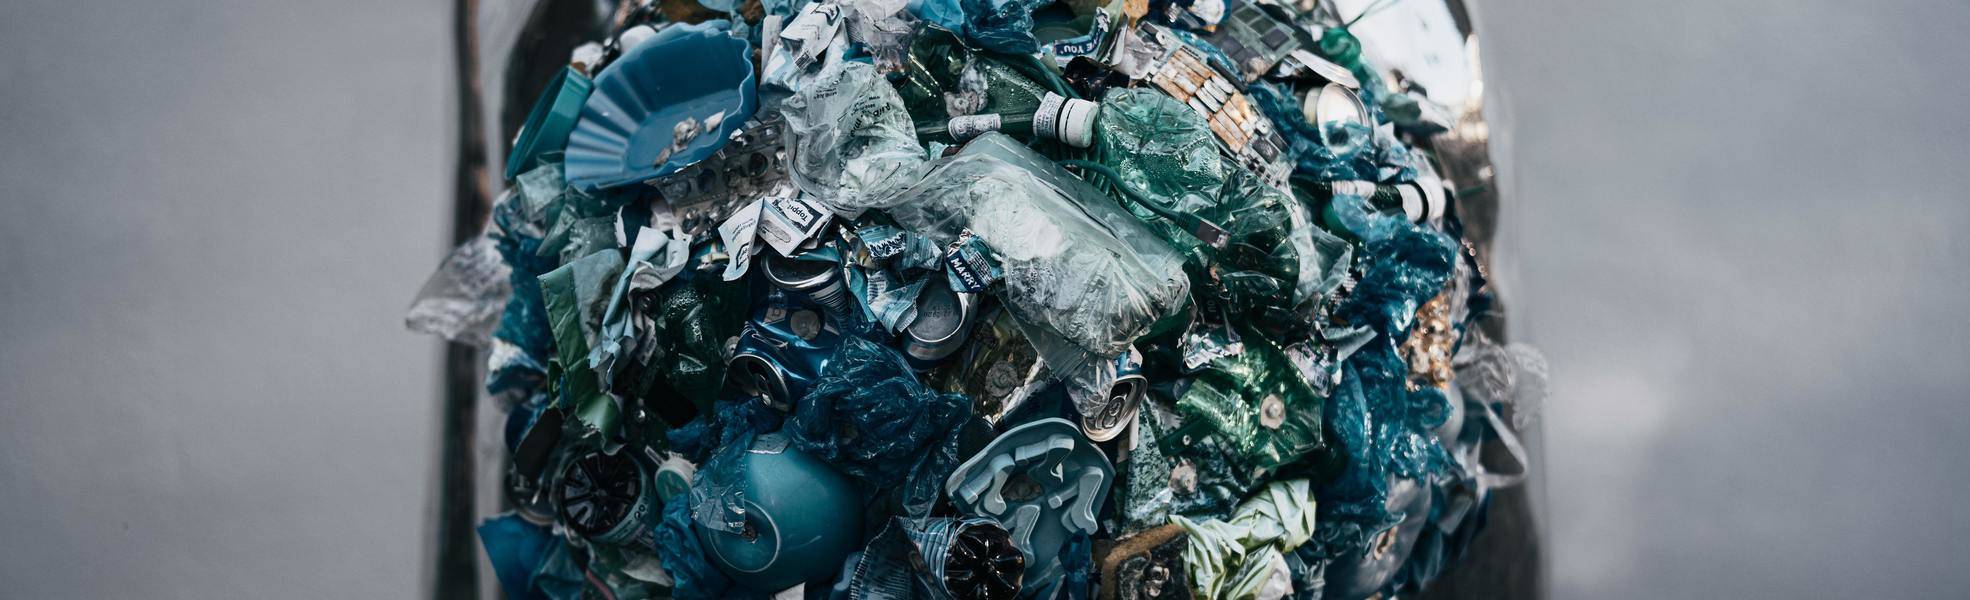 Tips on plastic waste limit